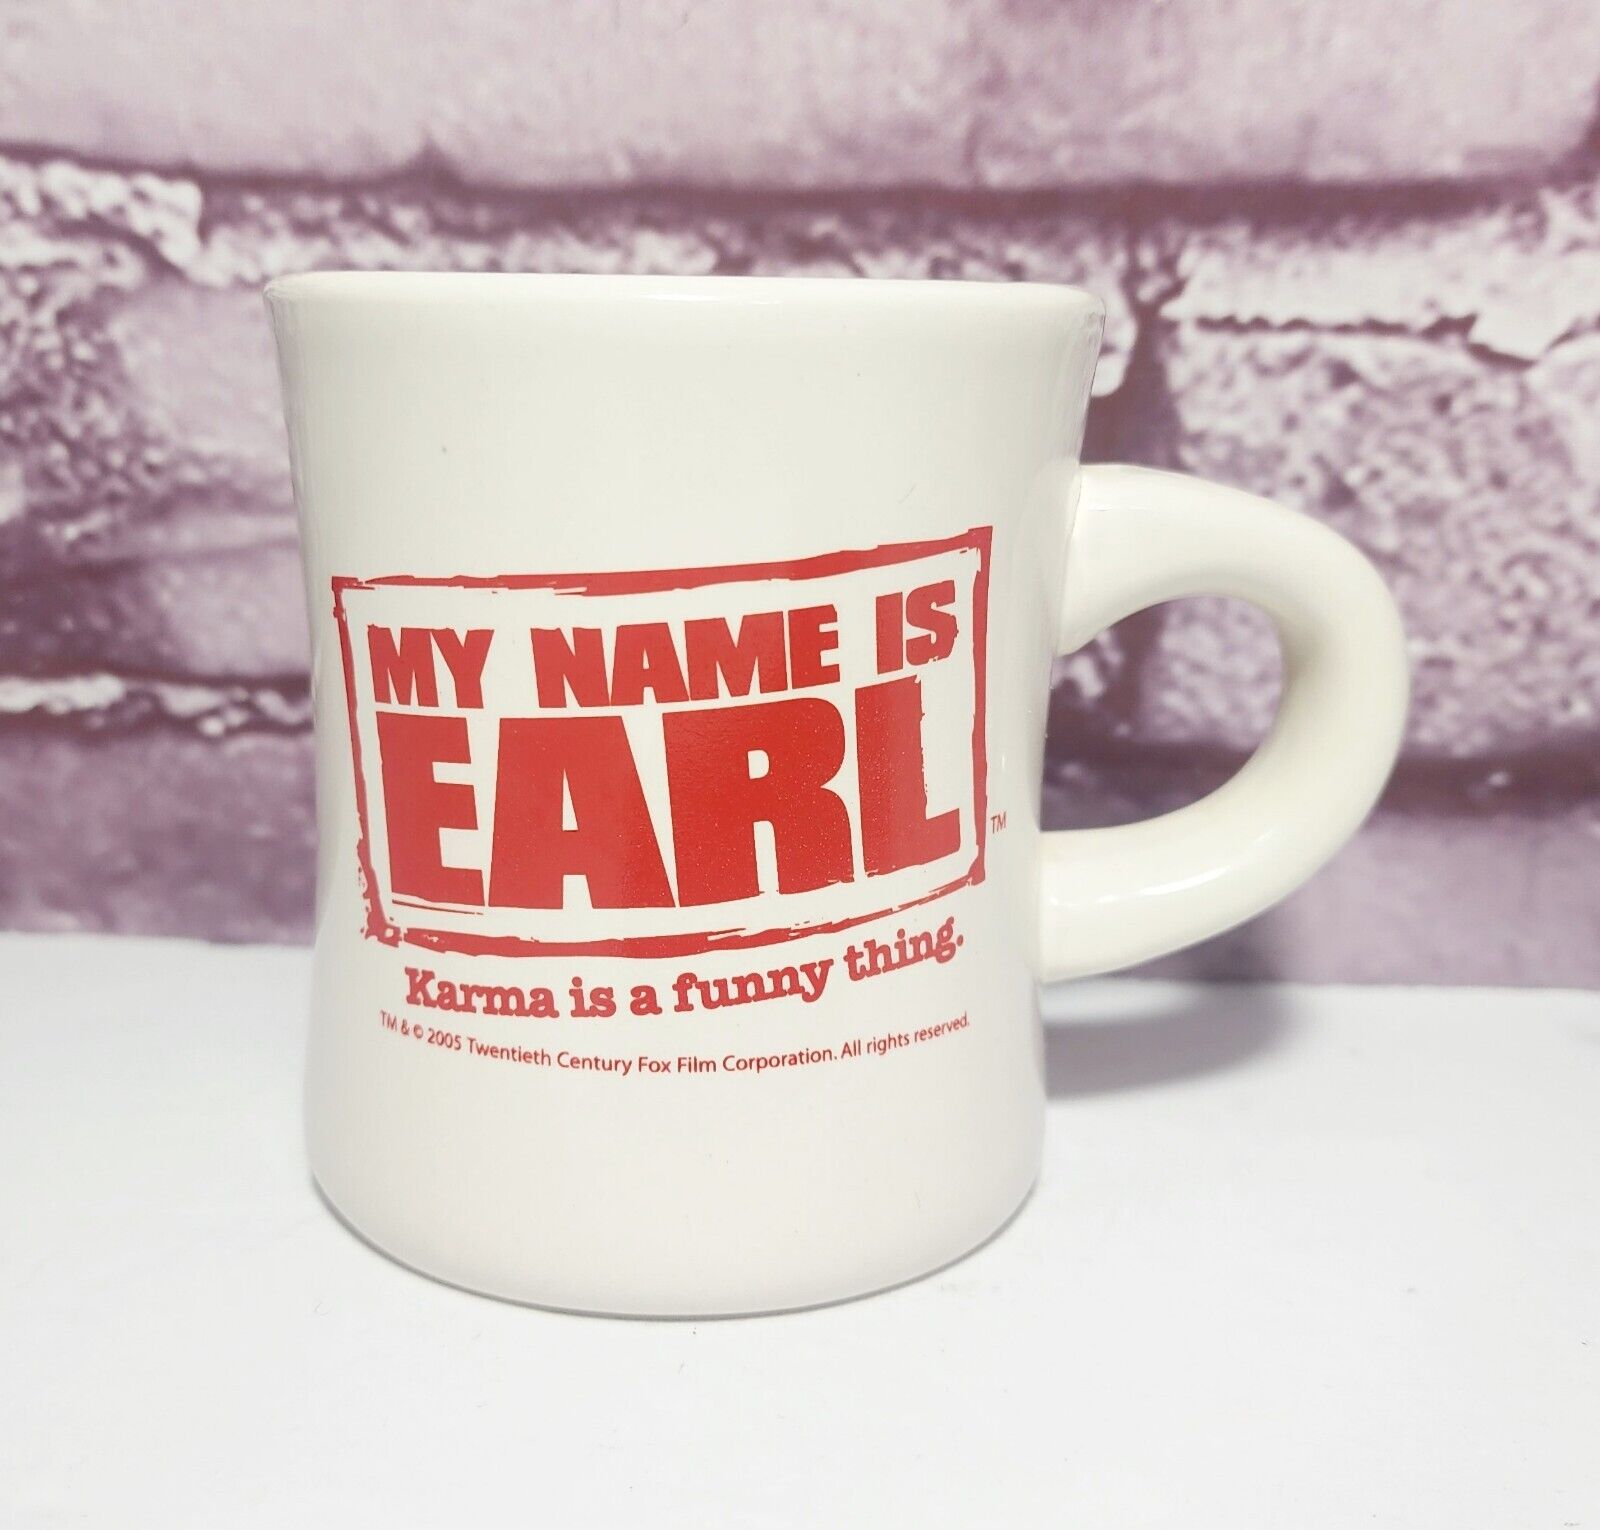 2005 Twentieth Century Fox My Name Is Earl Karma Coffee Mug Cup Promotional   